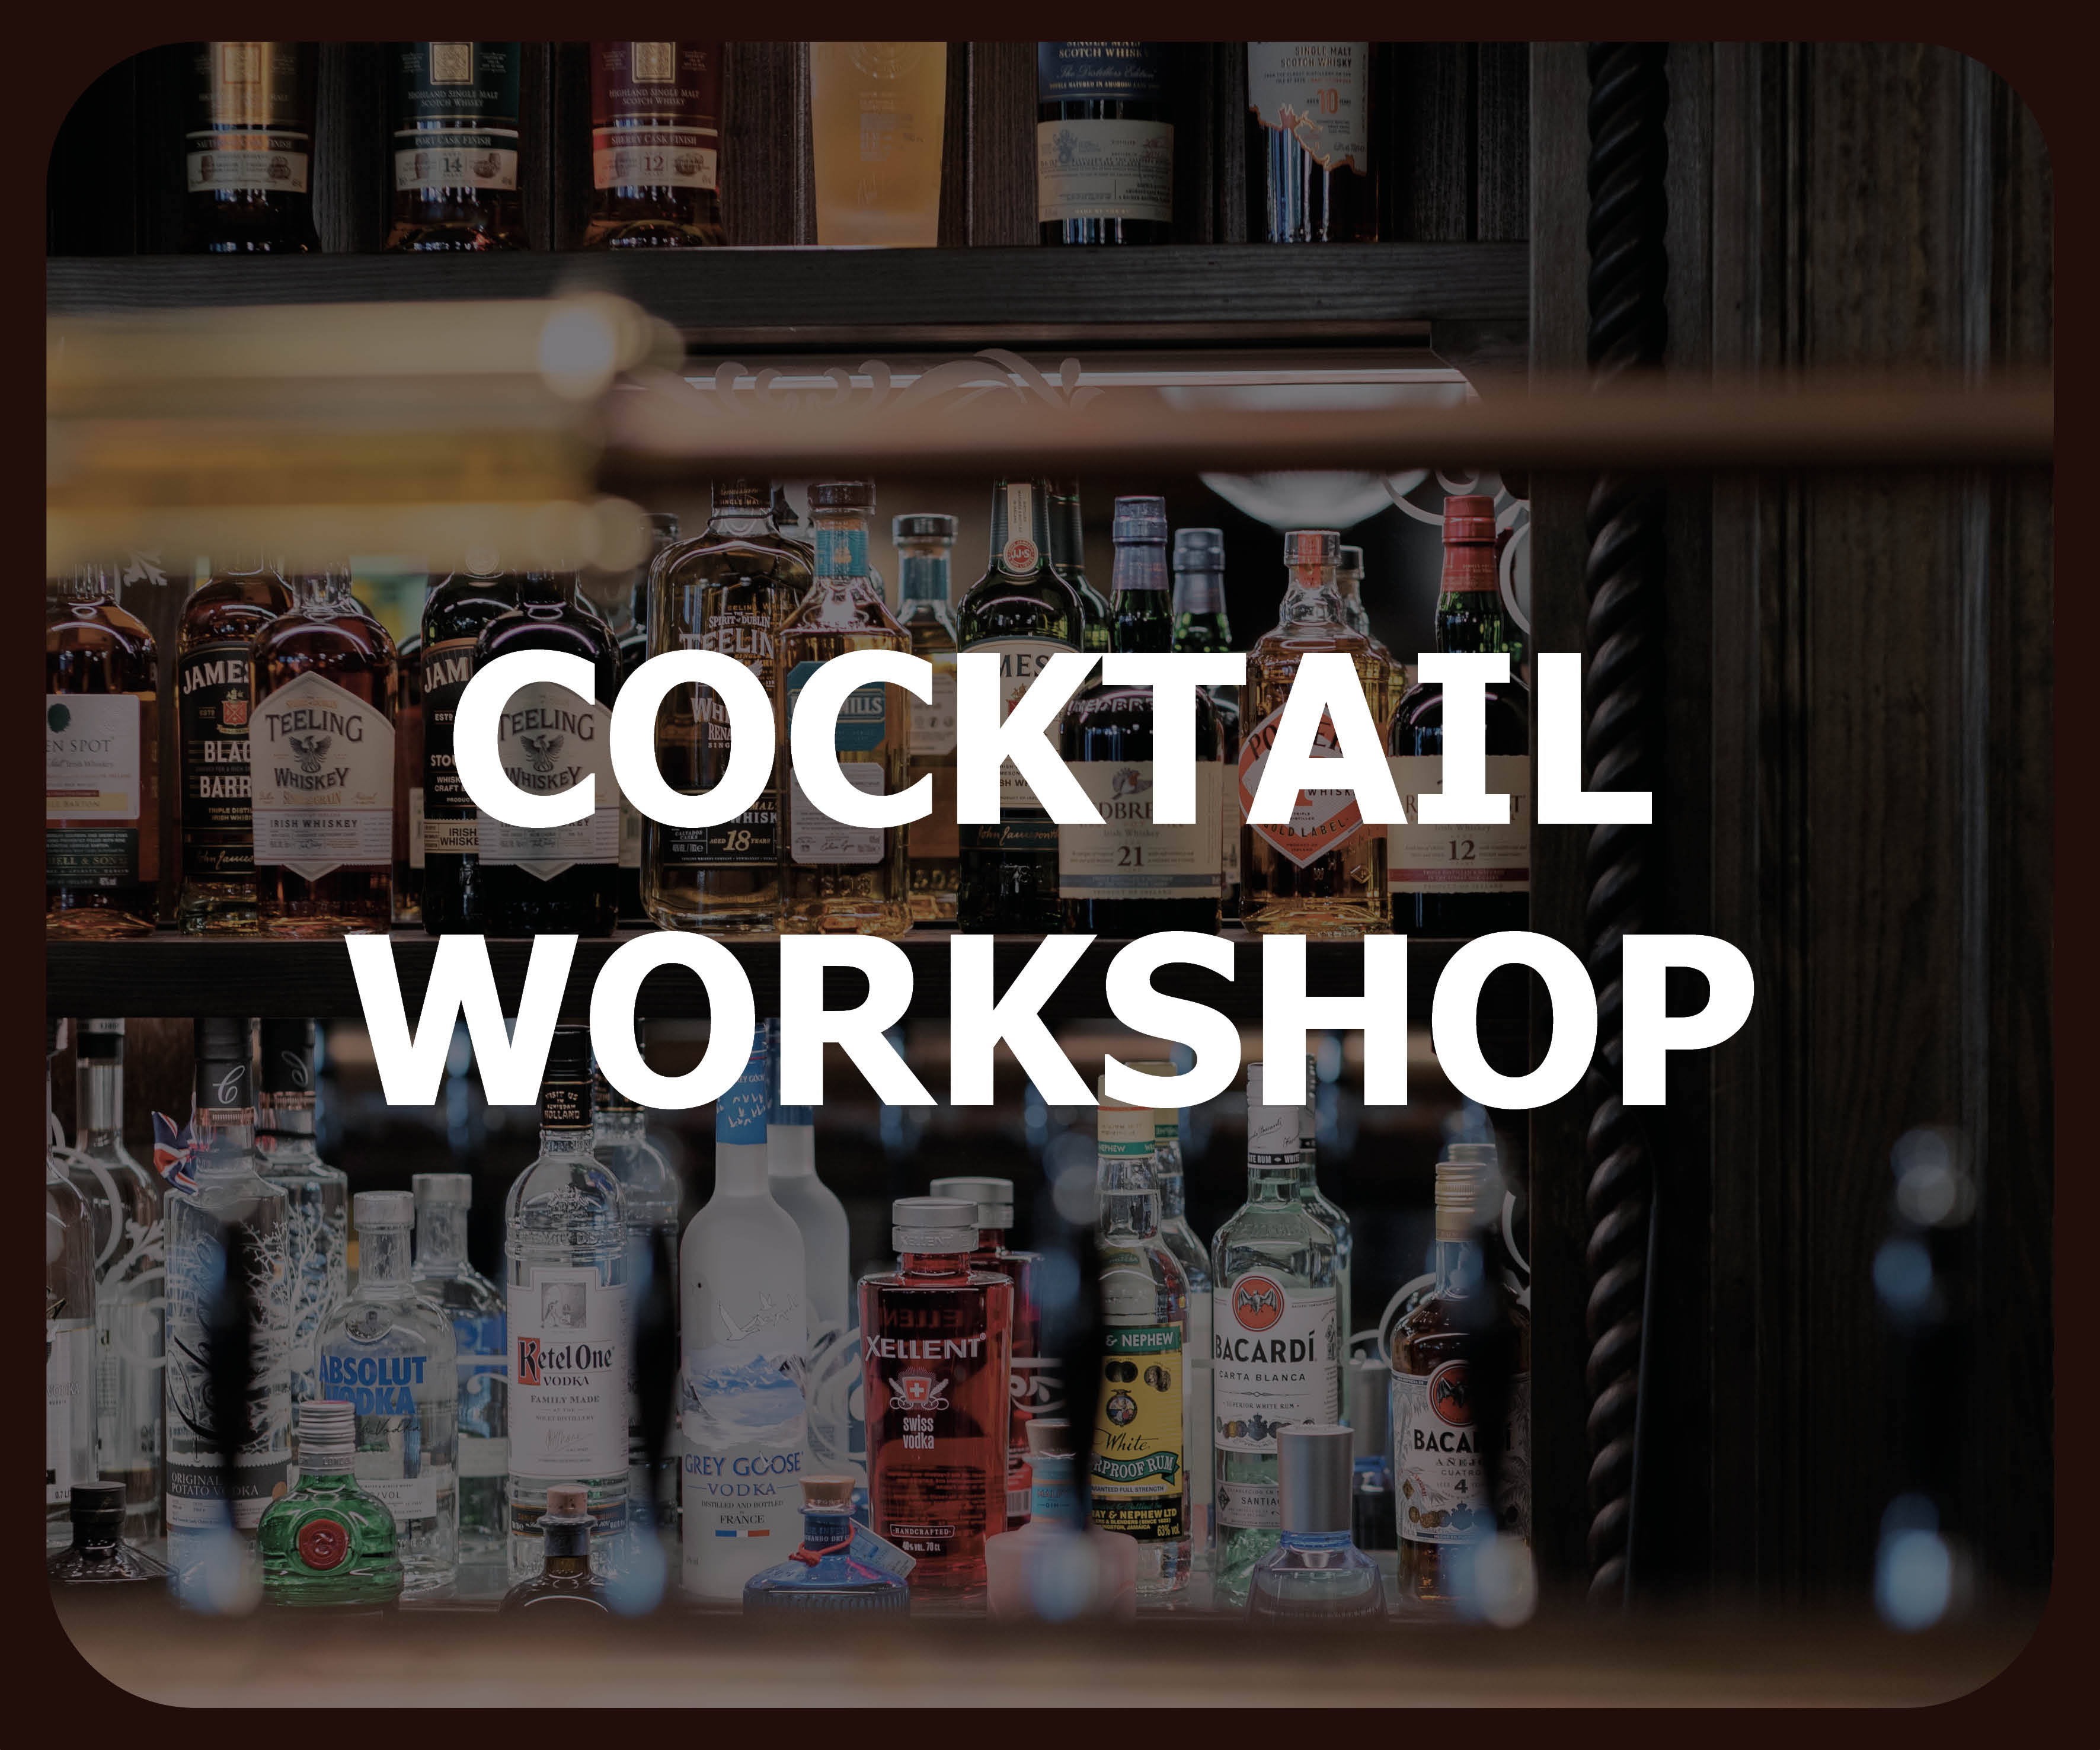 Cocktail workshop - fun course